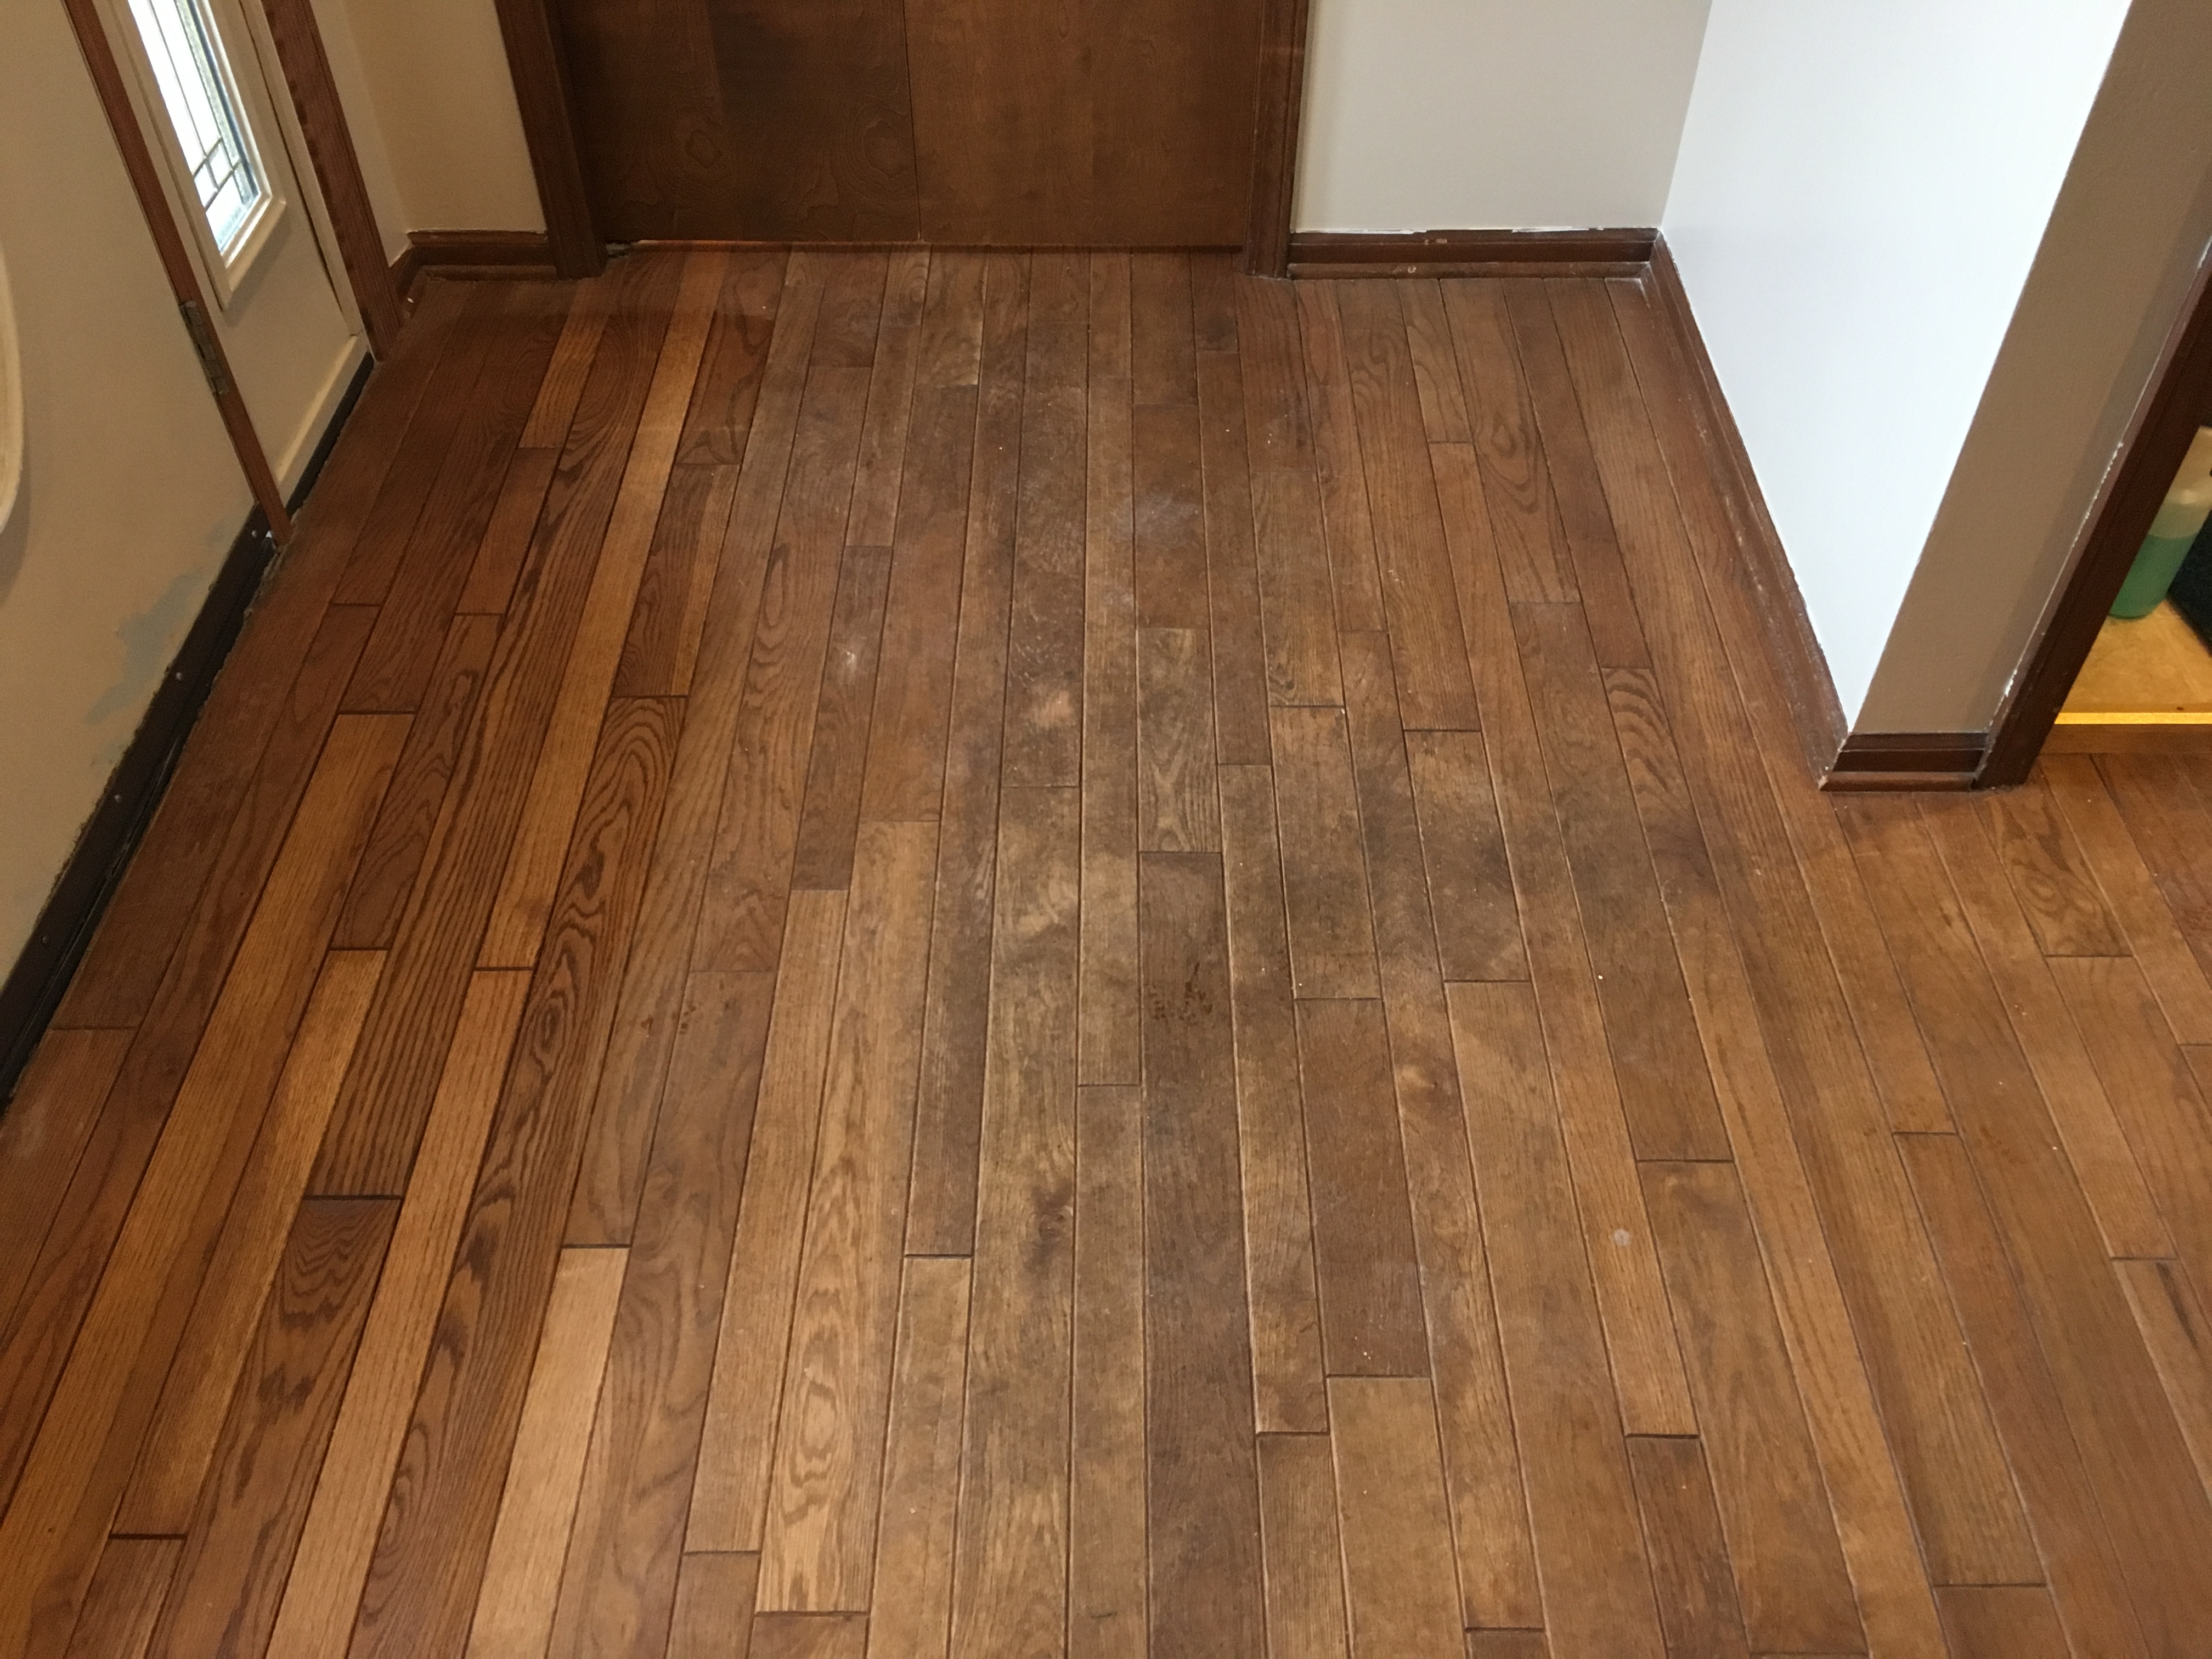 Referral Wood Floor Cleaning - Before